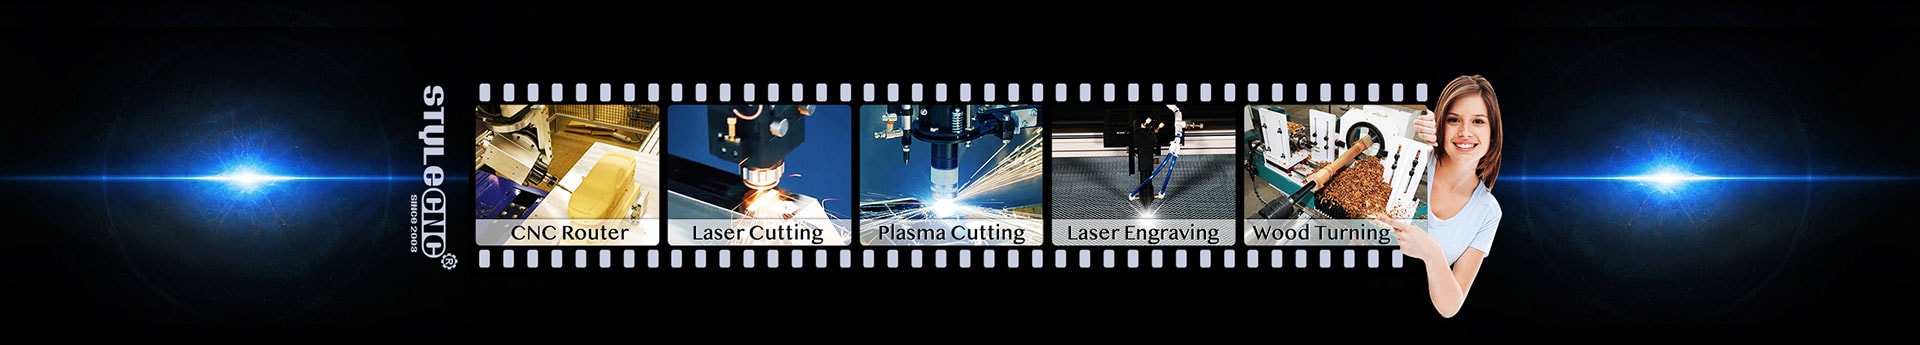 CNC Digital Knife Cutter Videos